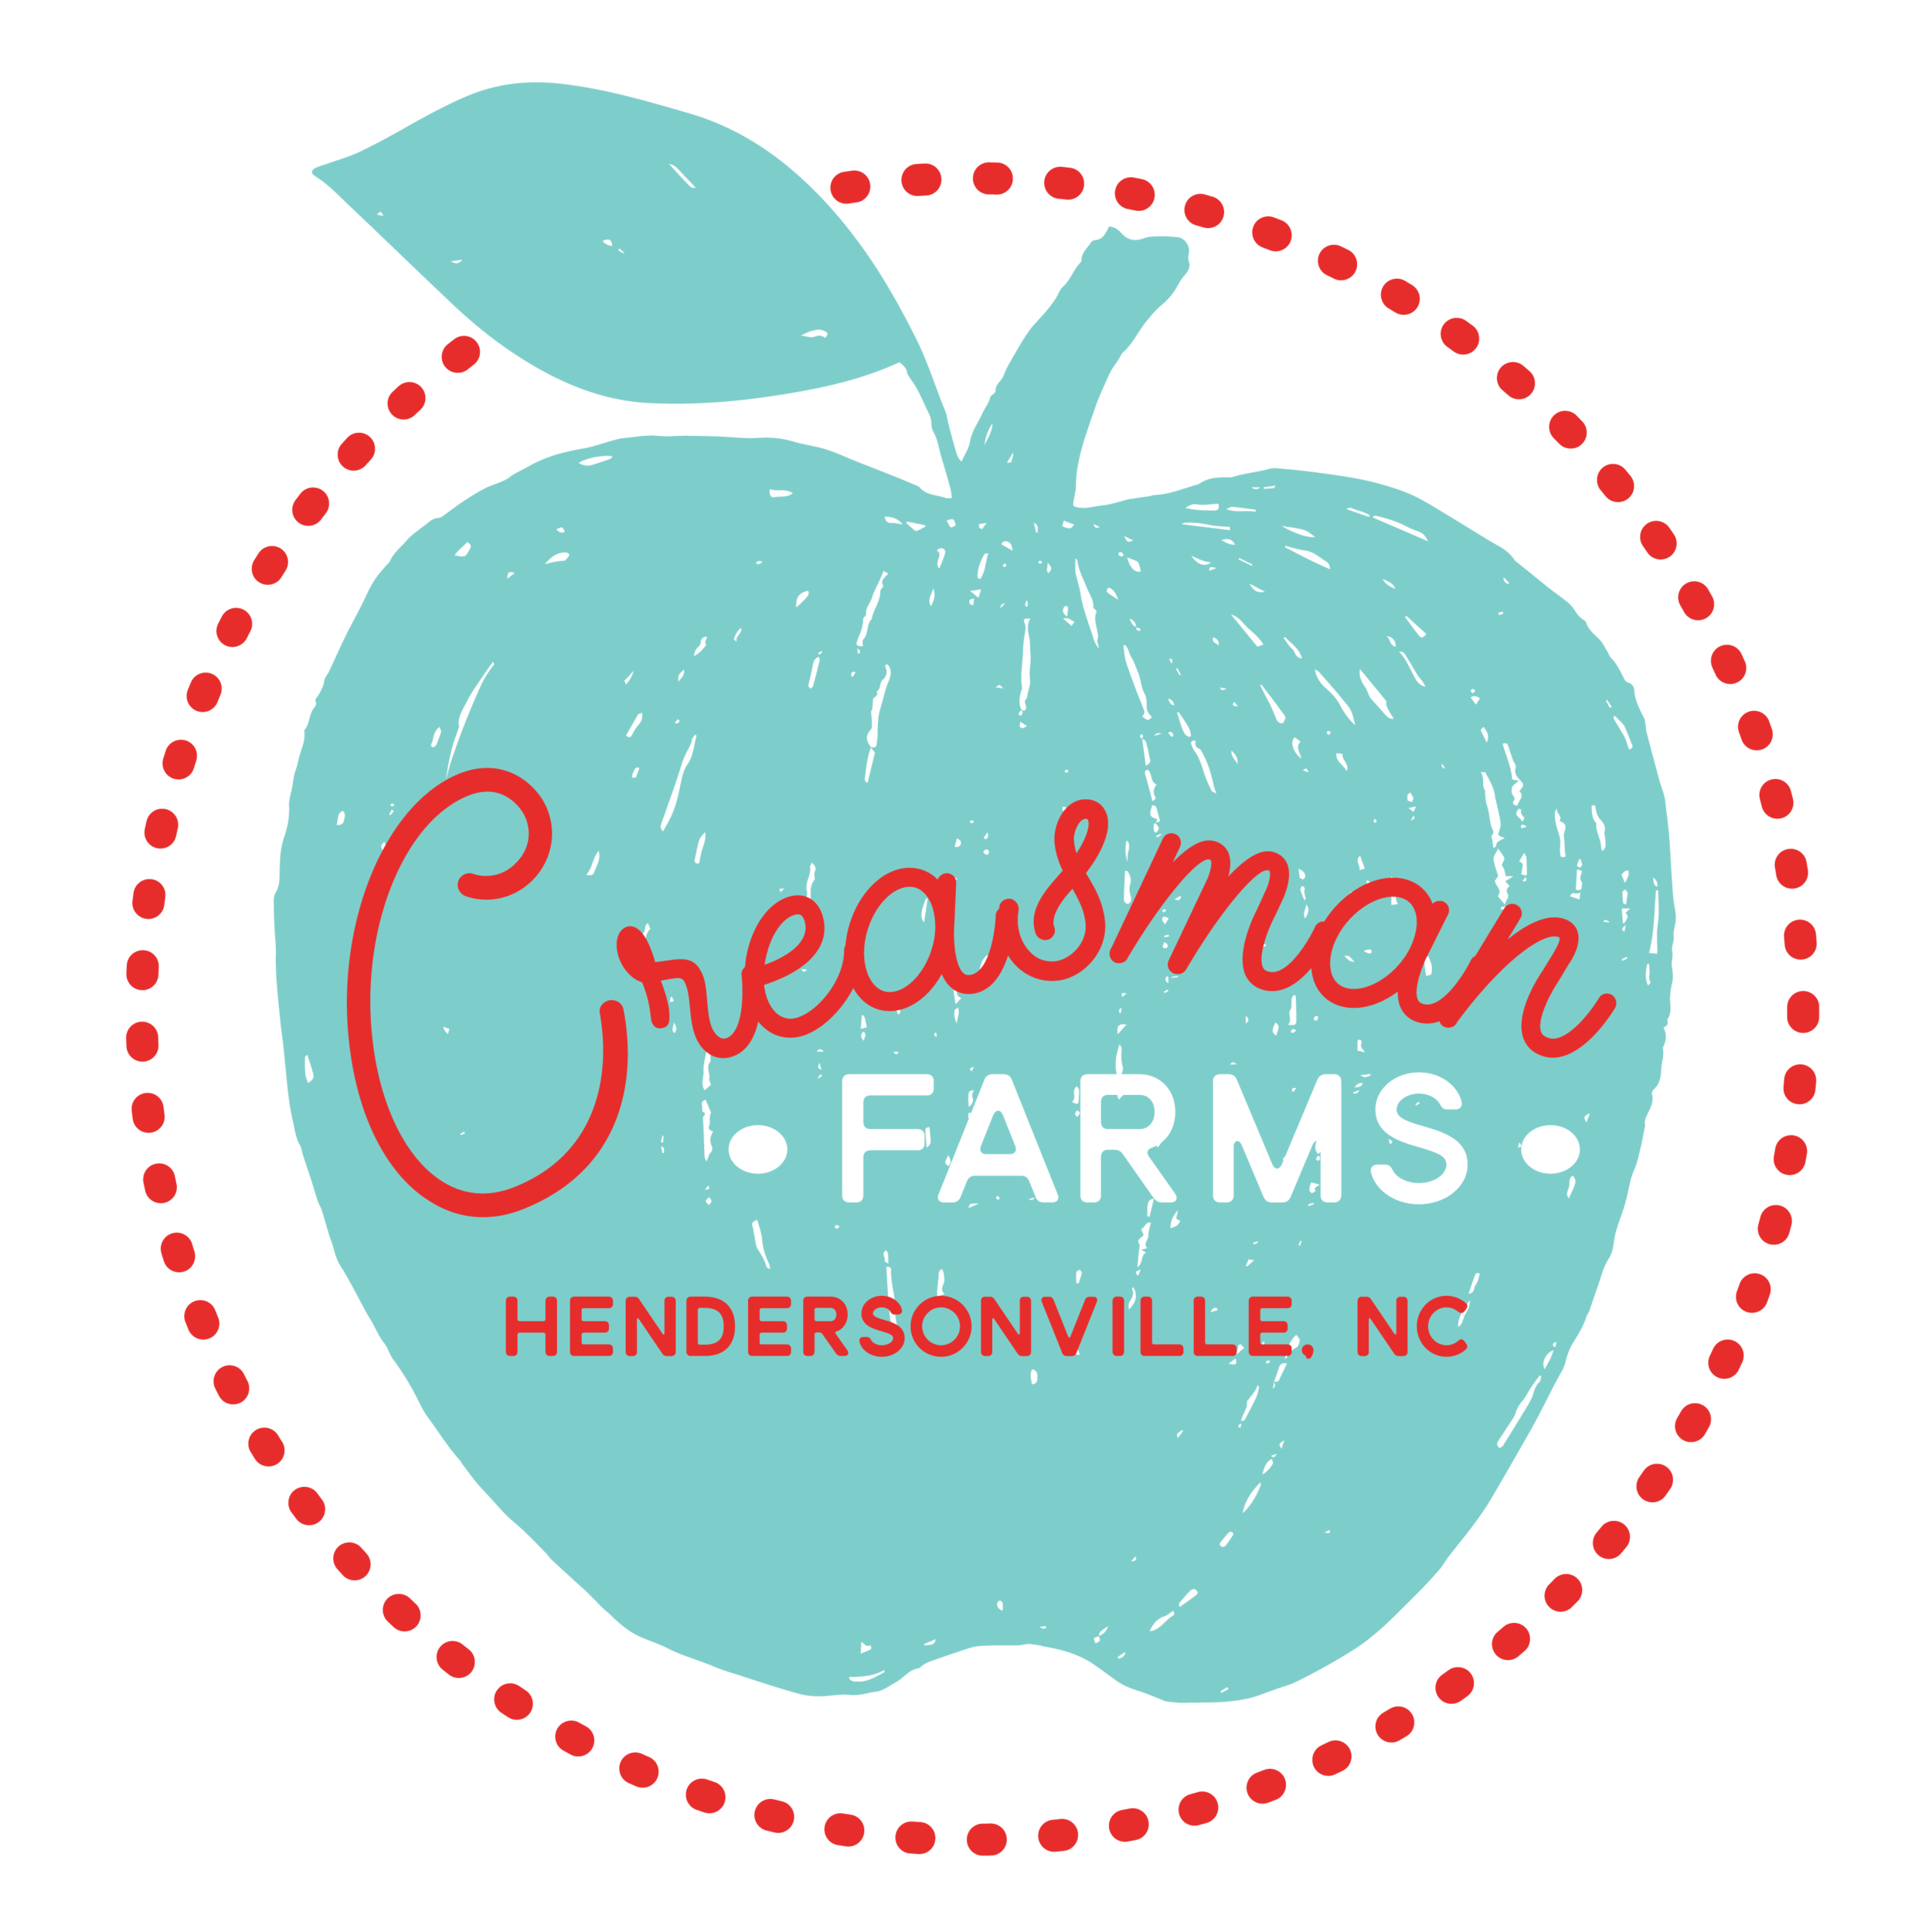 Creasman Farms